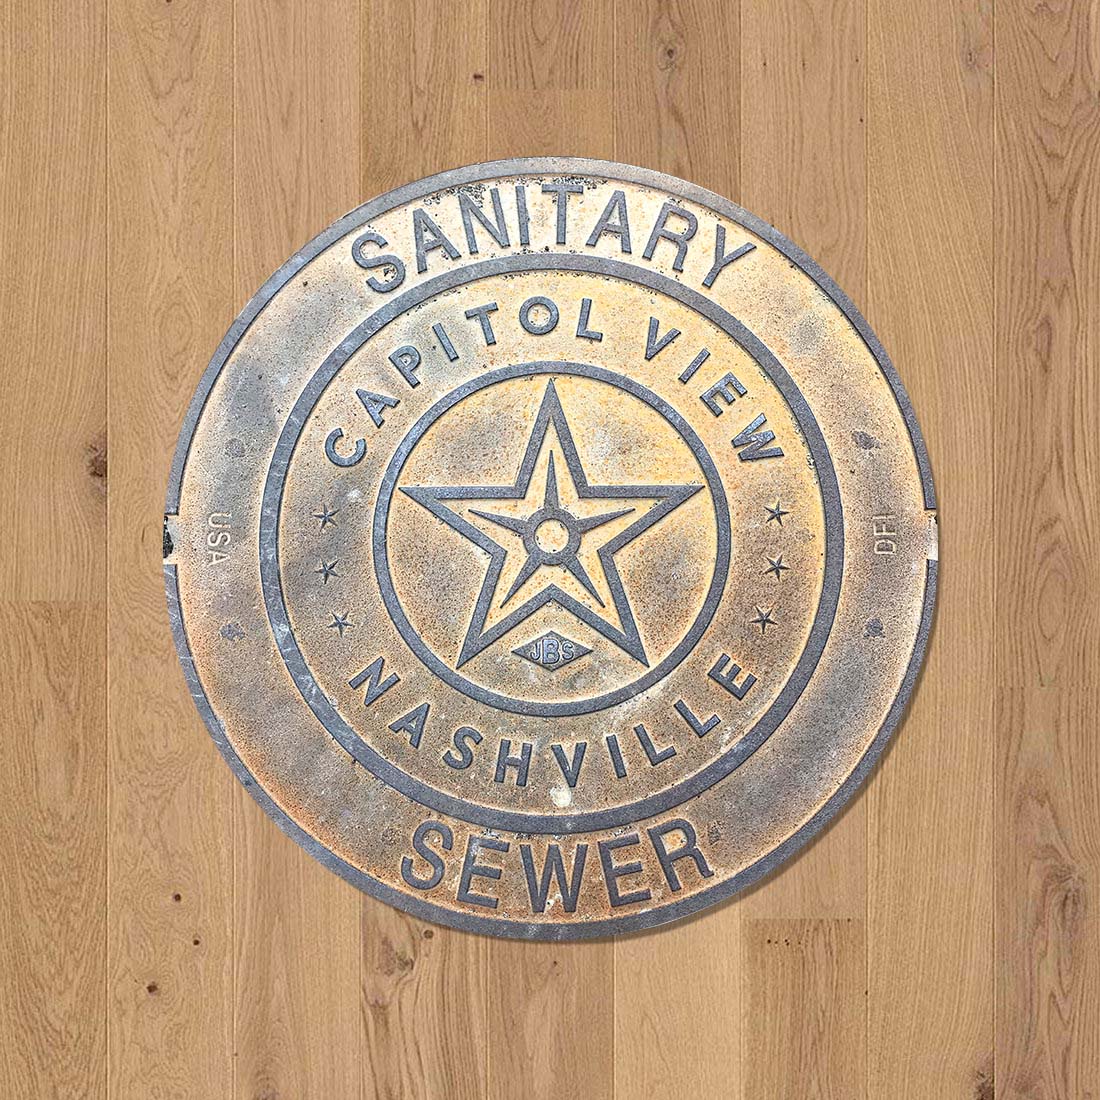 SOUTH SERIES - Sewer Cover Doormat, Trivet, Coaster - Nashville, TN